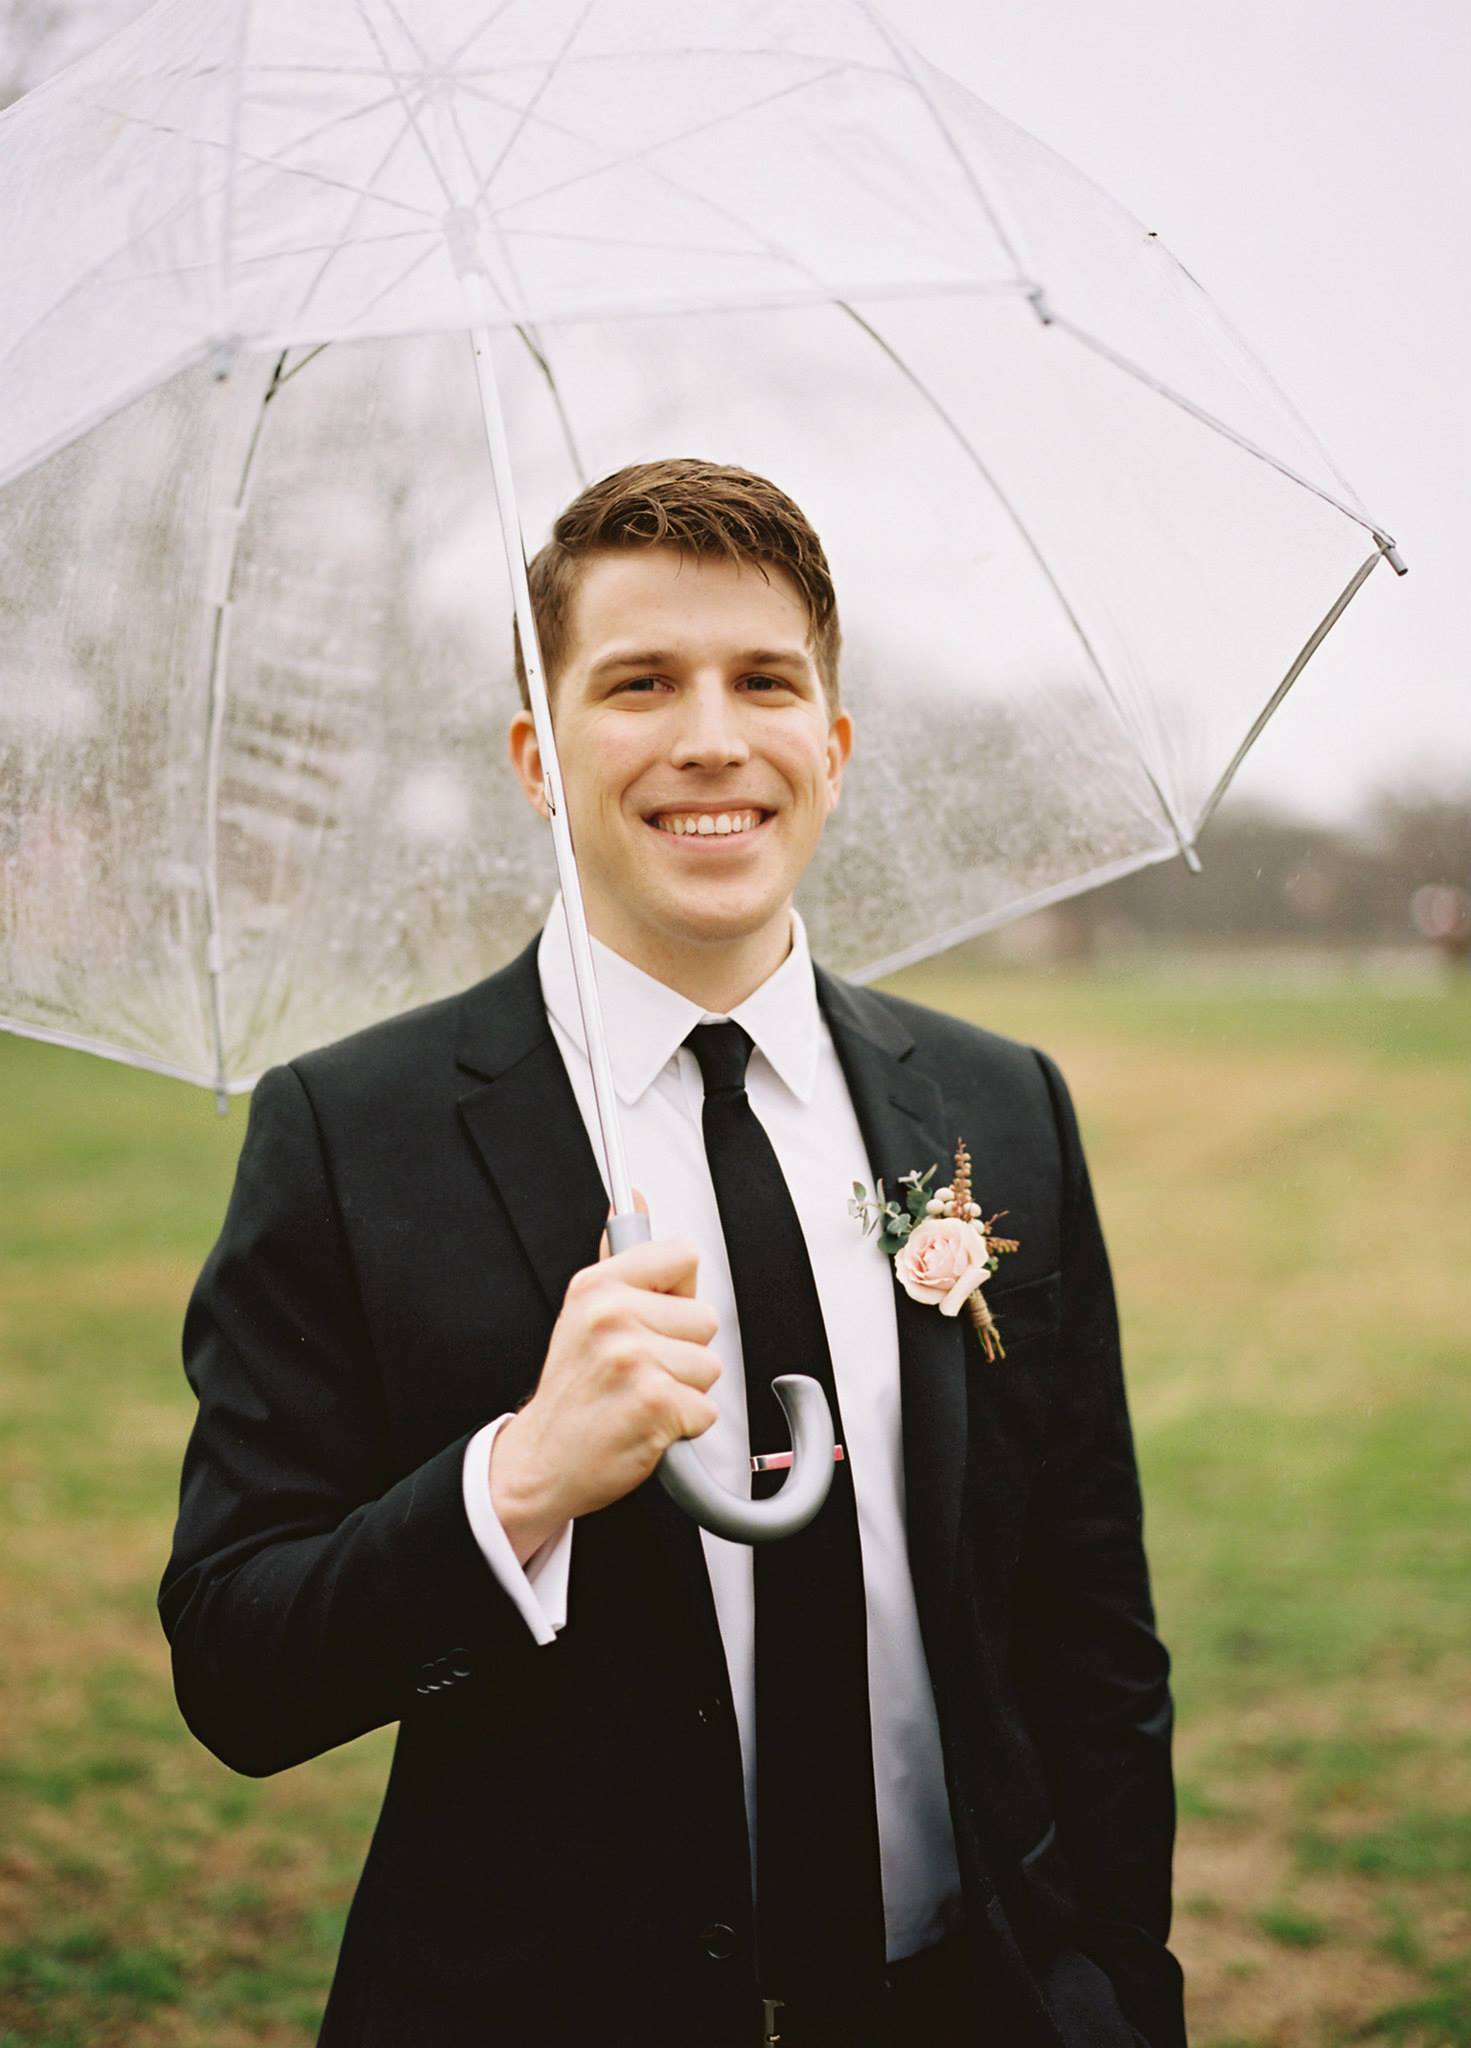 Rainy wedding day // Neutral groom boutonniere